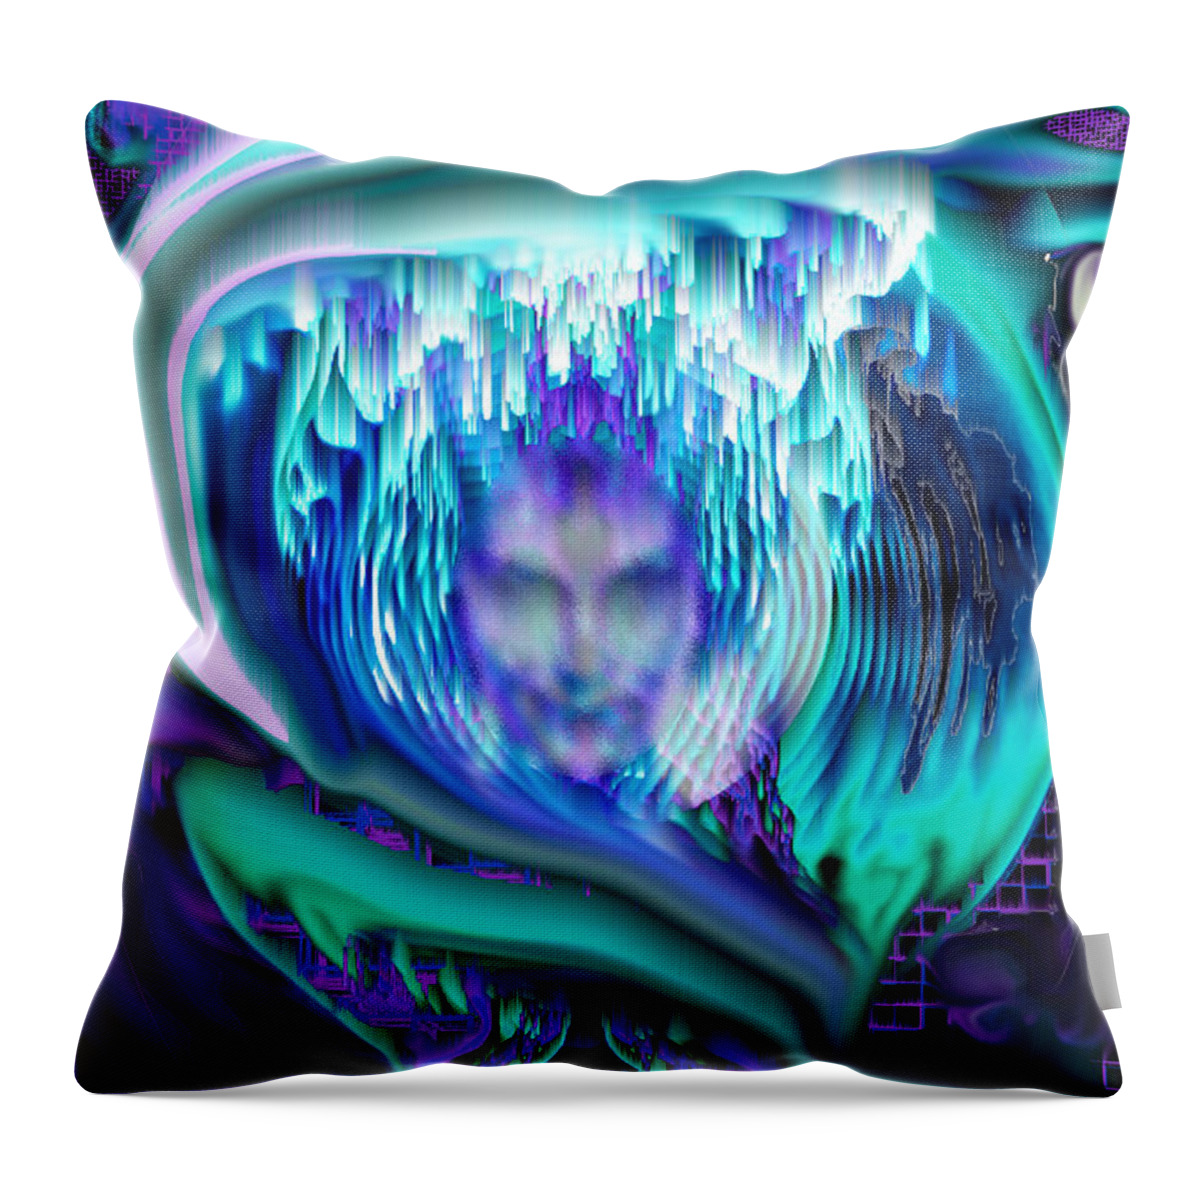 Lightning In A Jar Throw Pillow featuring the digital art Lightning in a Jar by Seth Weaver